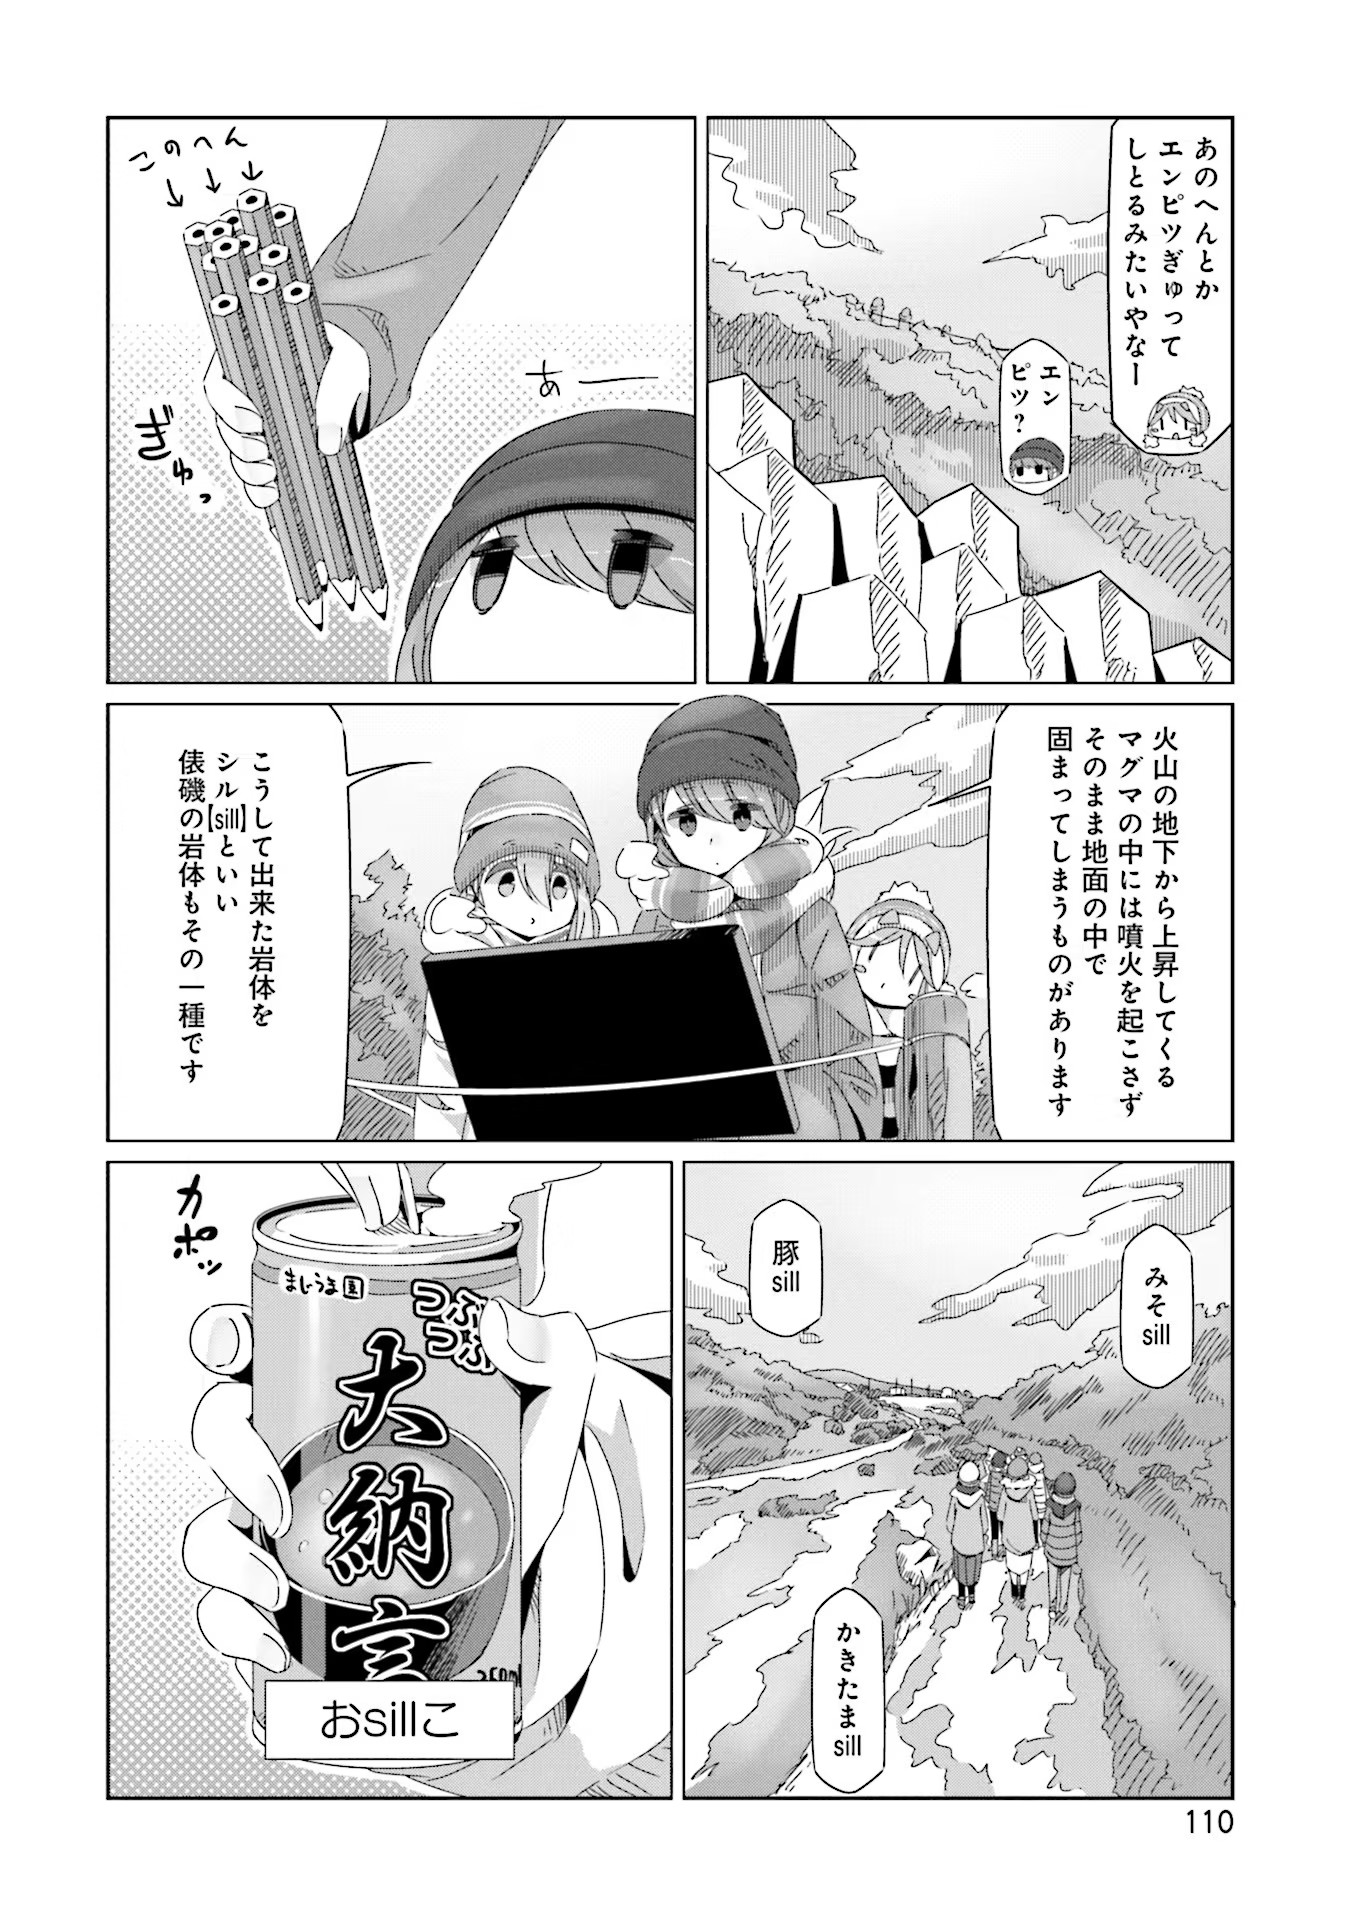 Yuru Camp - Chapter 45 - Page 4